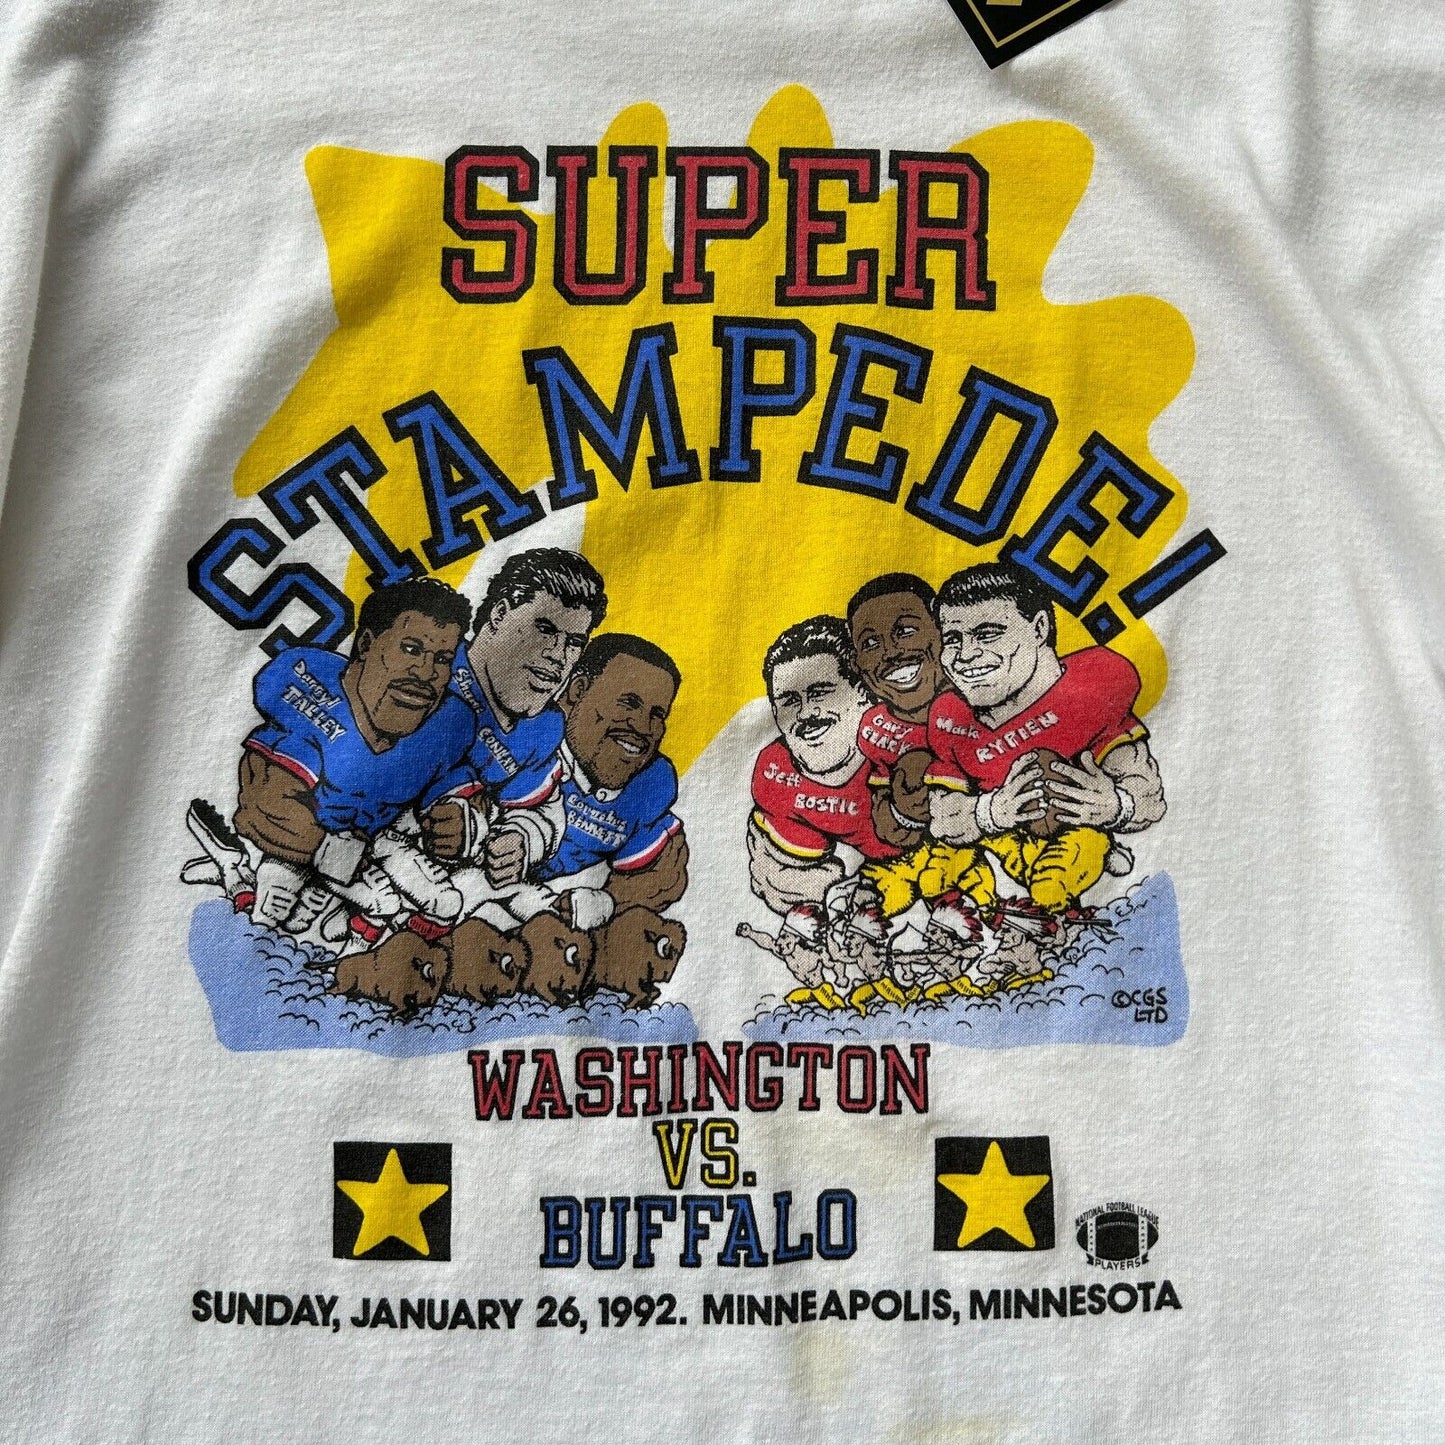 VINTAGE 1992 | Super Stampede Football White T-Shirt sz M Adult